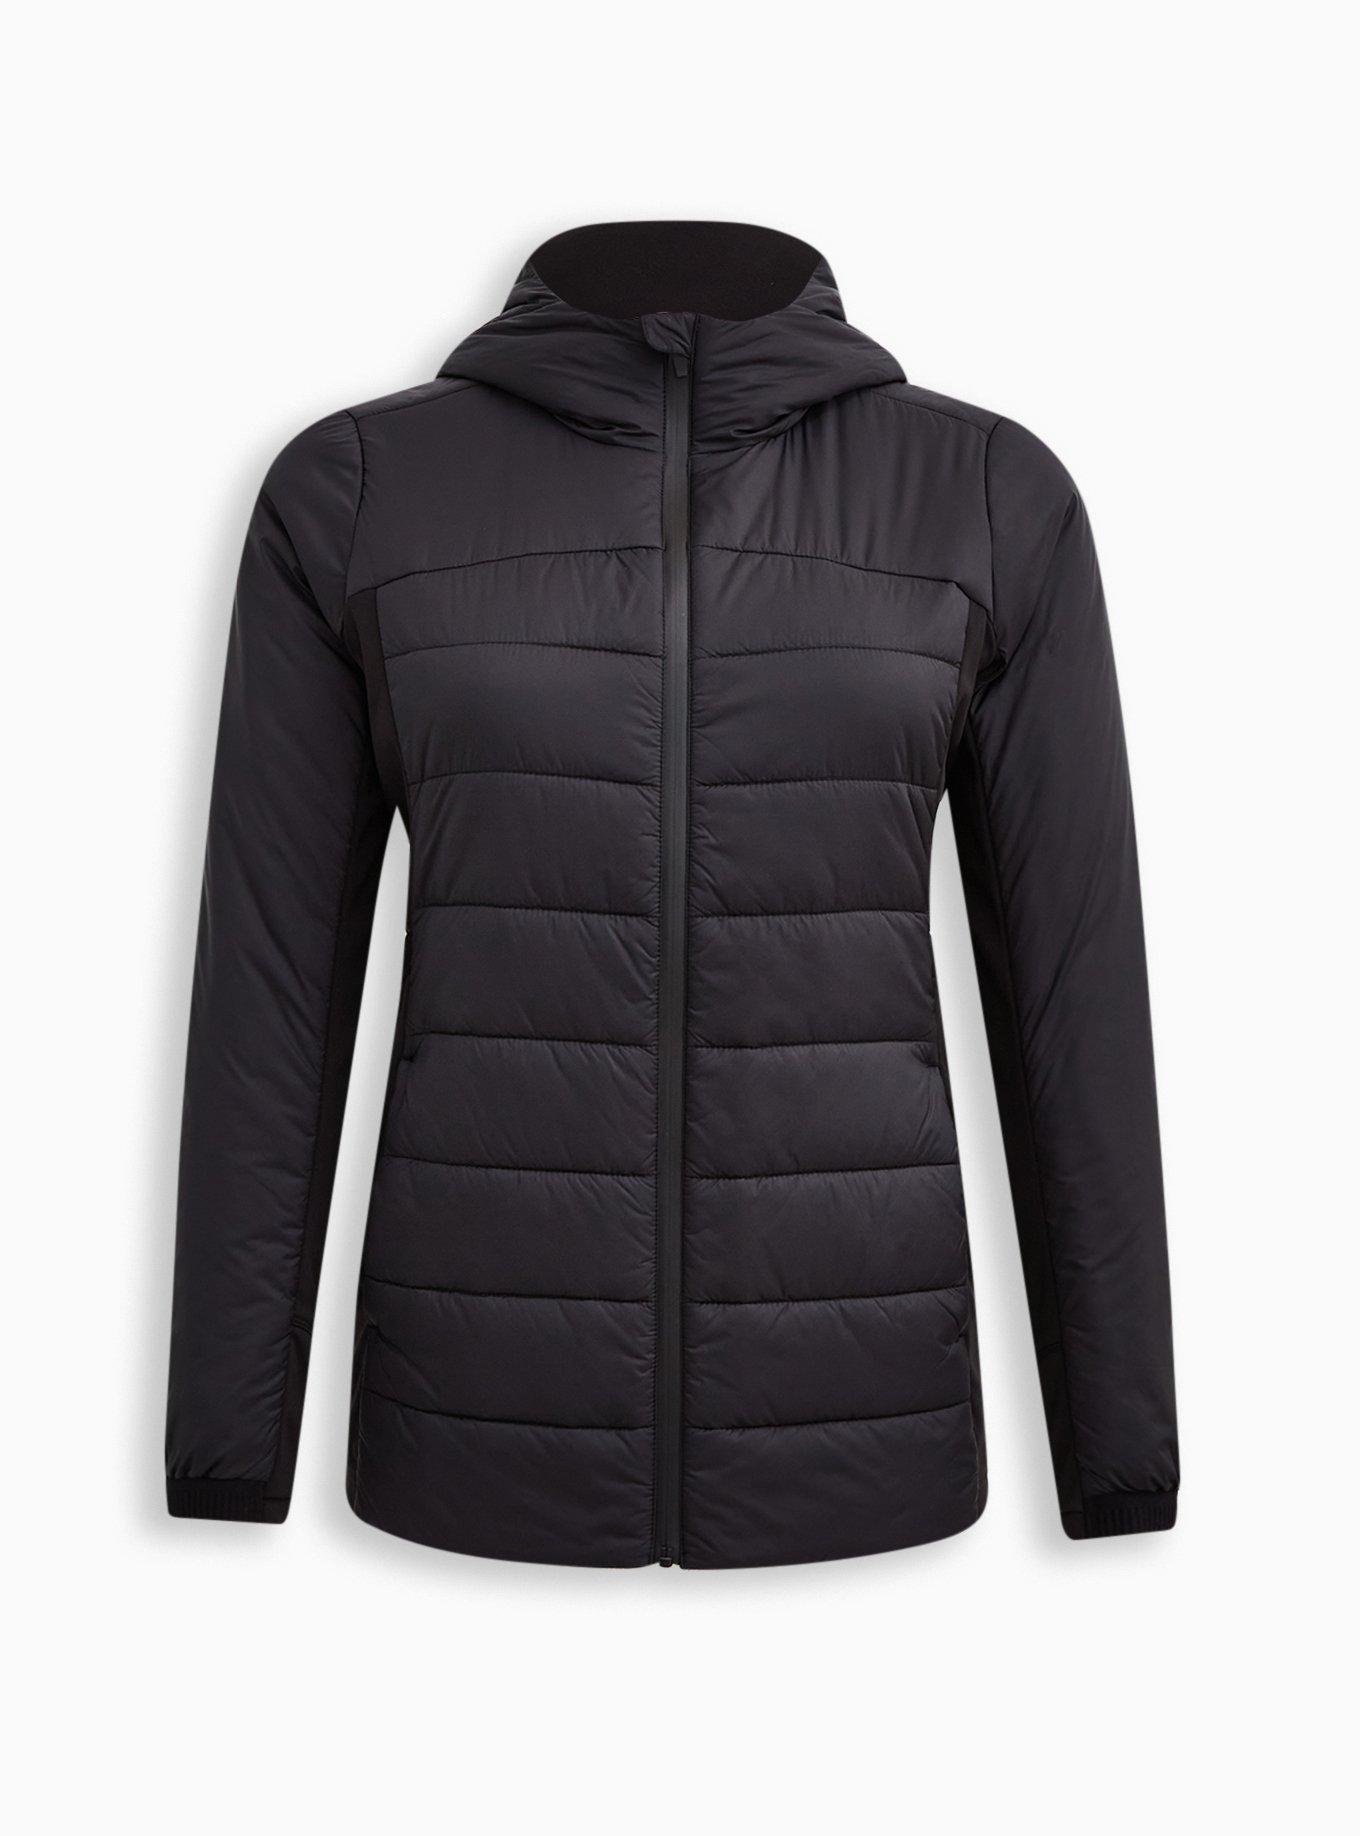 Plus Size - Active Puffer Jacket - Nylon & Fleece Black - Torrid